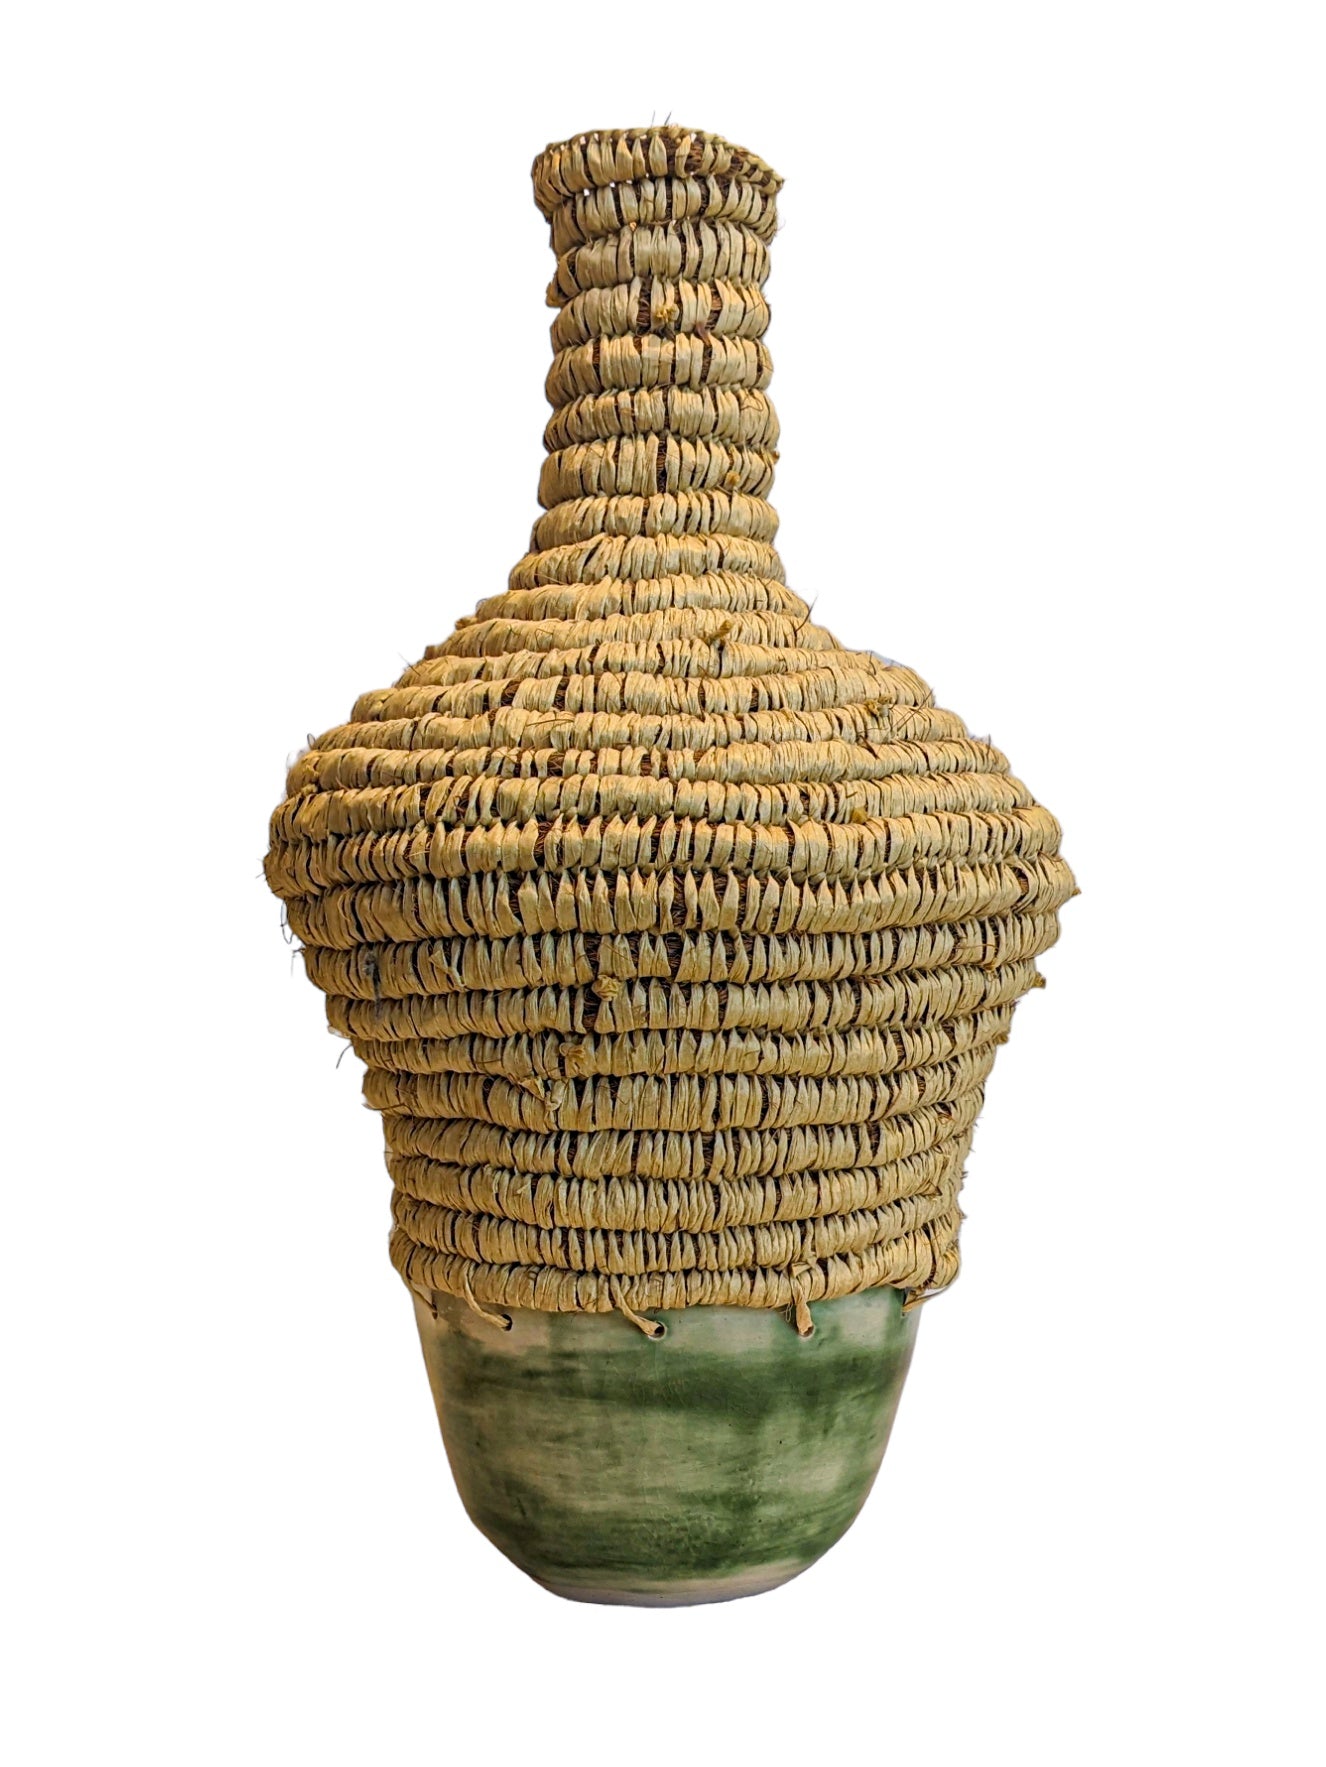 MONIQUE BURKHEAD | ‘Clay + Weave IV’ | Ceramic green glaze / natural raffia